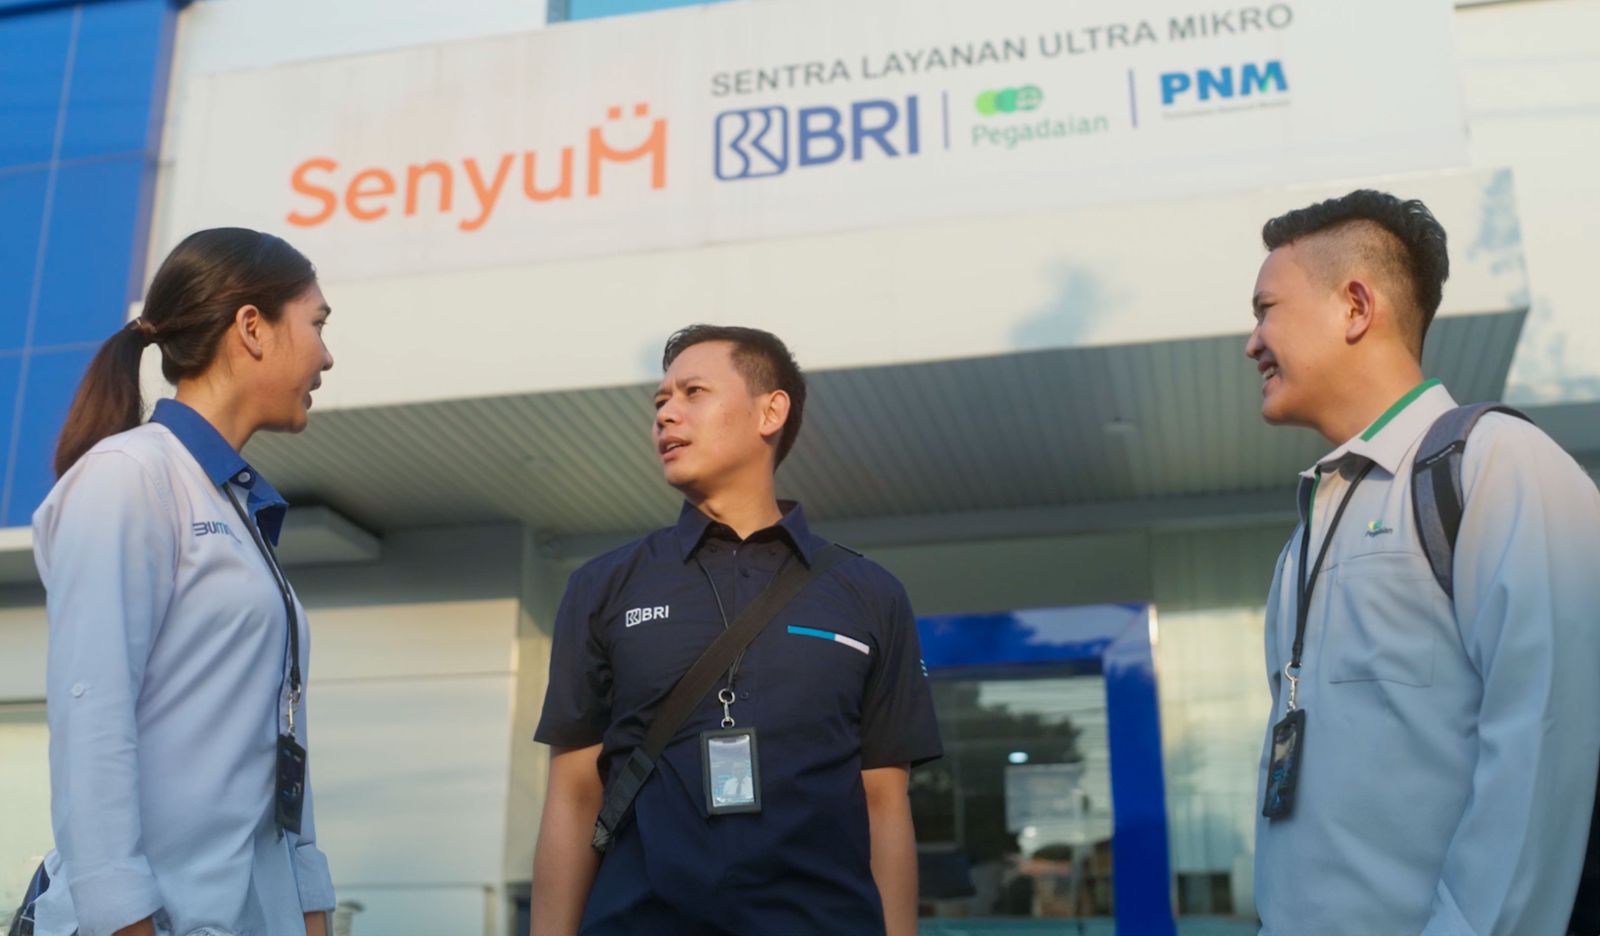 Holding Ultra Mikro BRI Group Jangkau Jaringan Lebih Luas, Wujudkan Indonesia Emas 2045